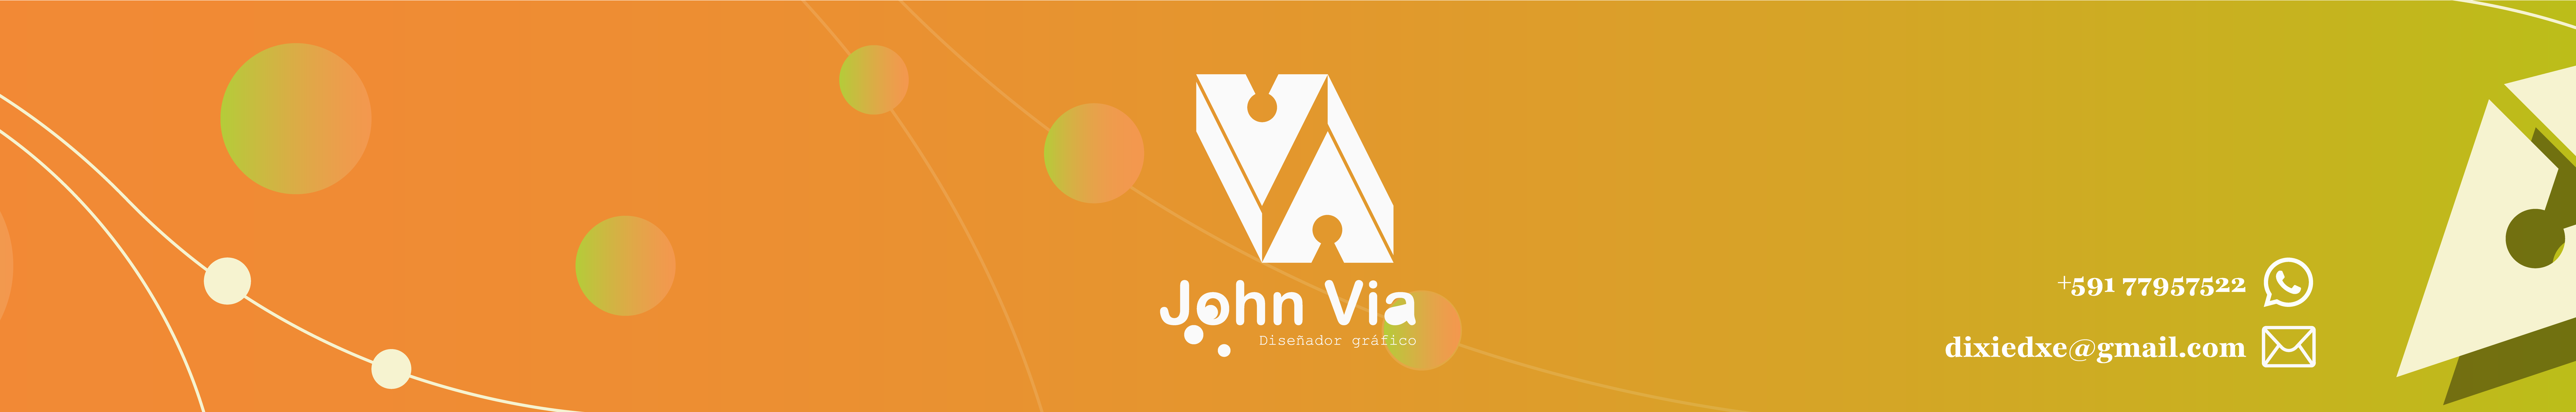 John Via's profile banner